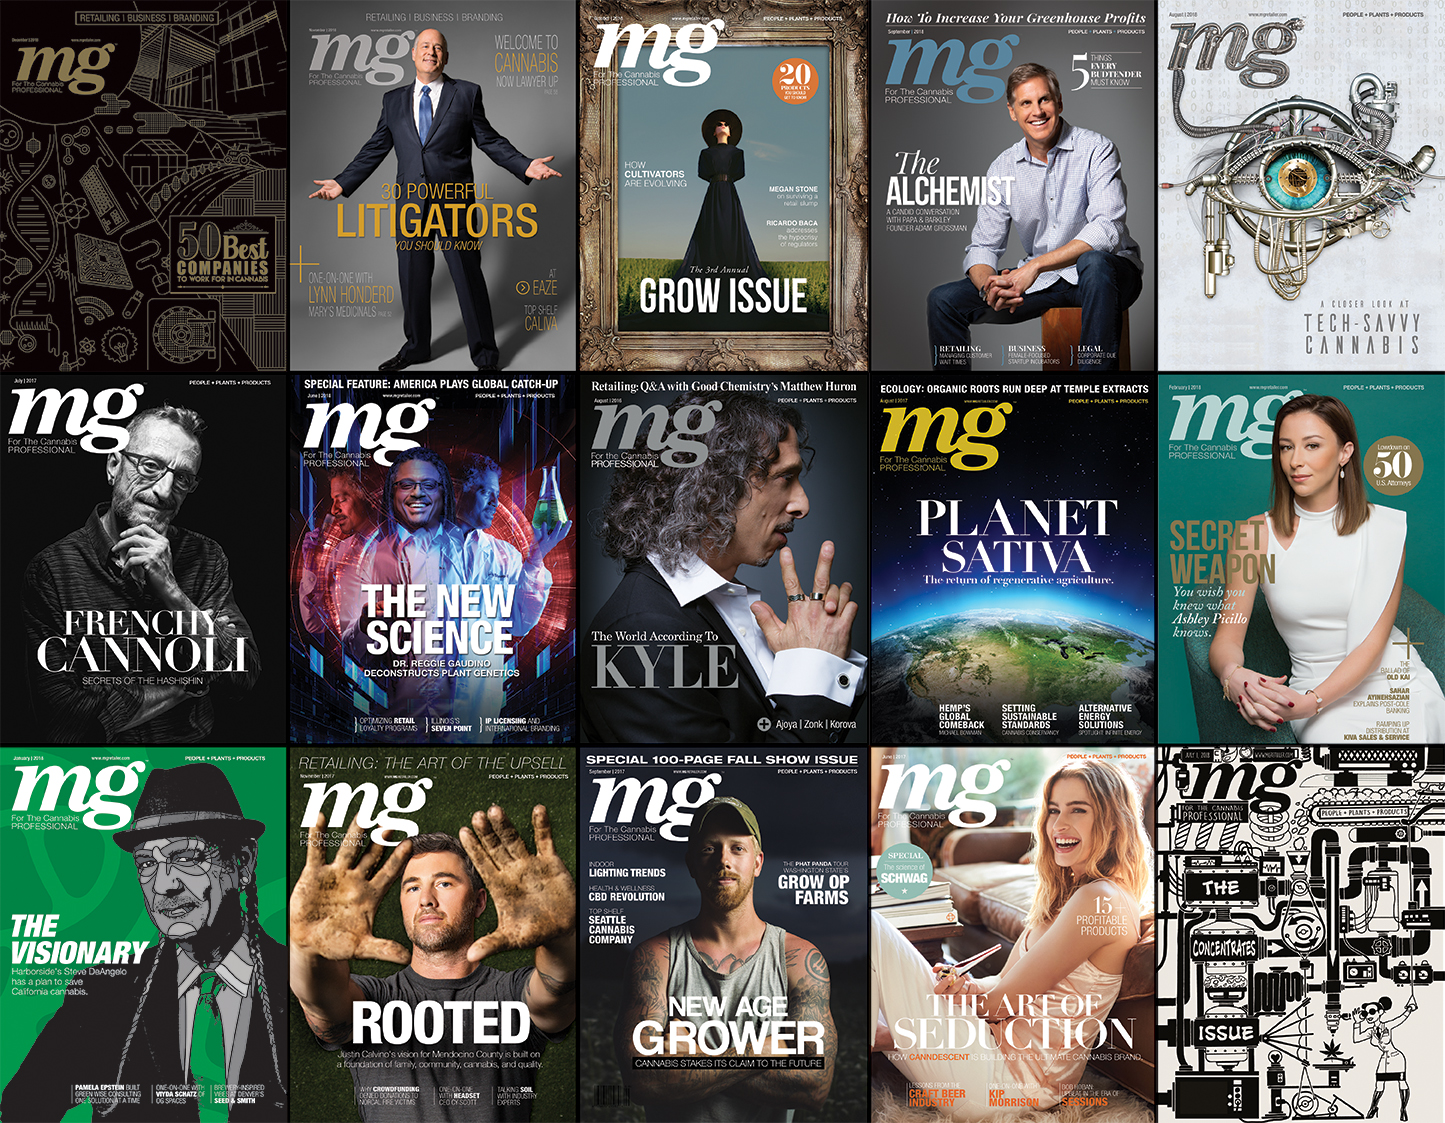 mg magazine covers 2018